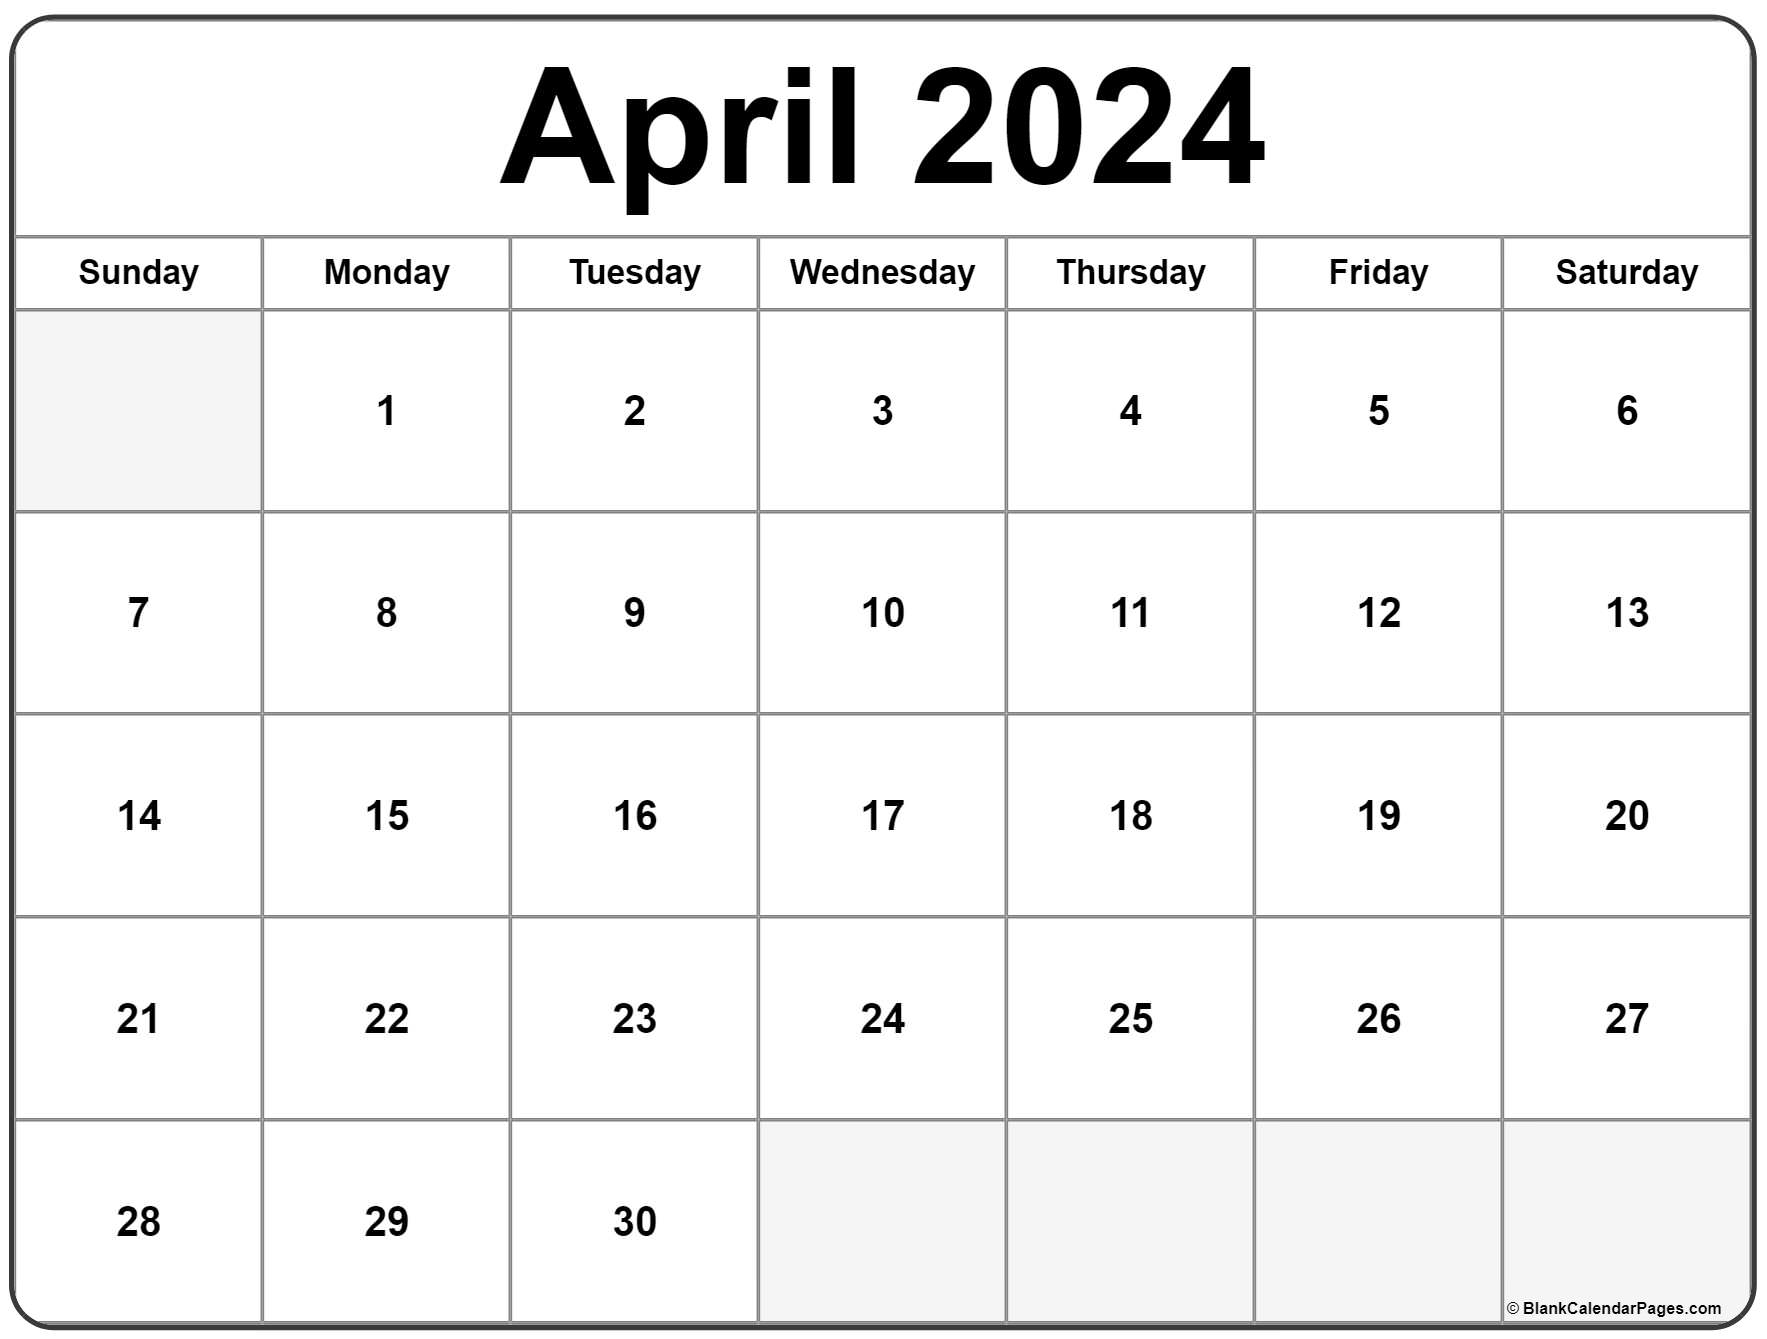 April 2024 Calendar | Free Printable Calendar within April And May Printable Calendar 2024